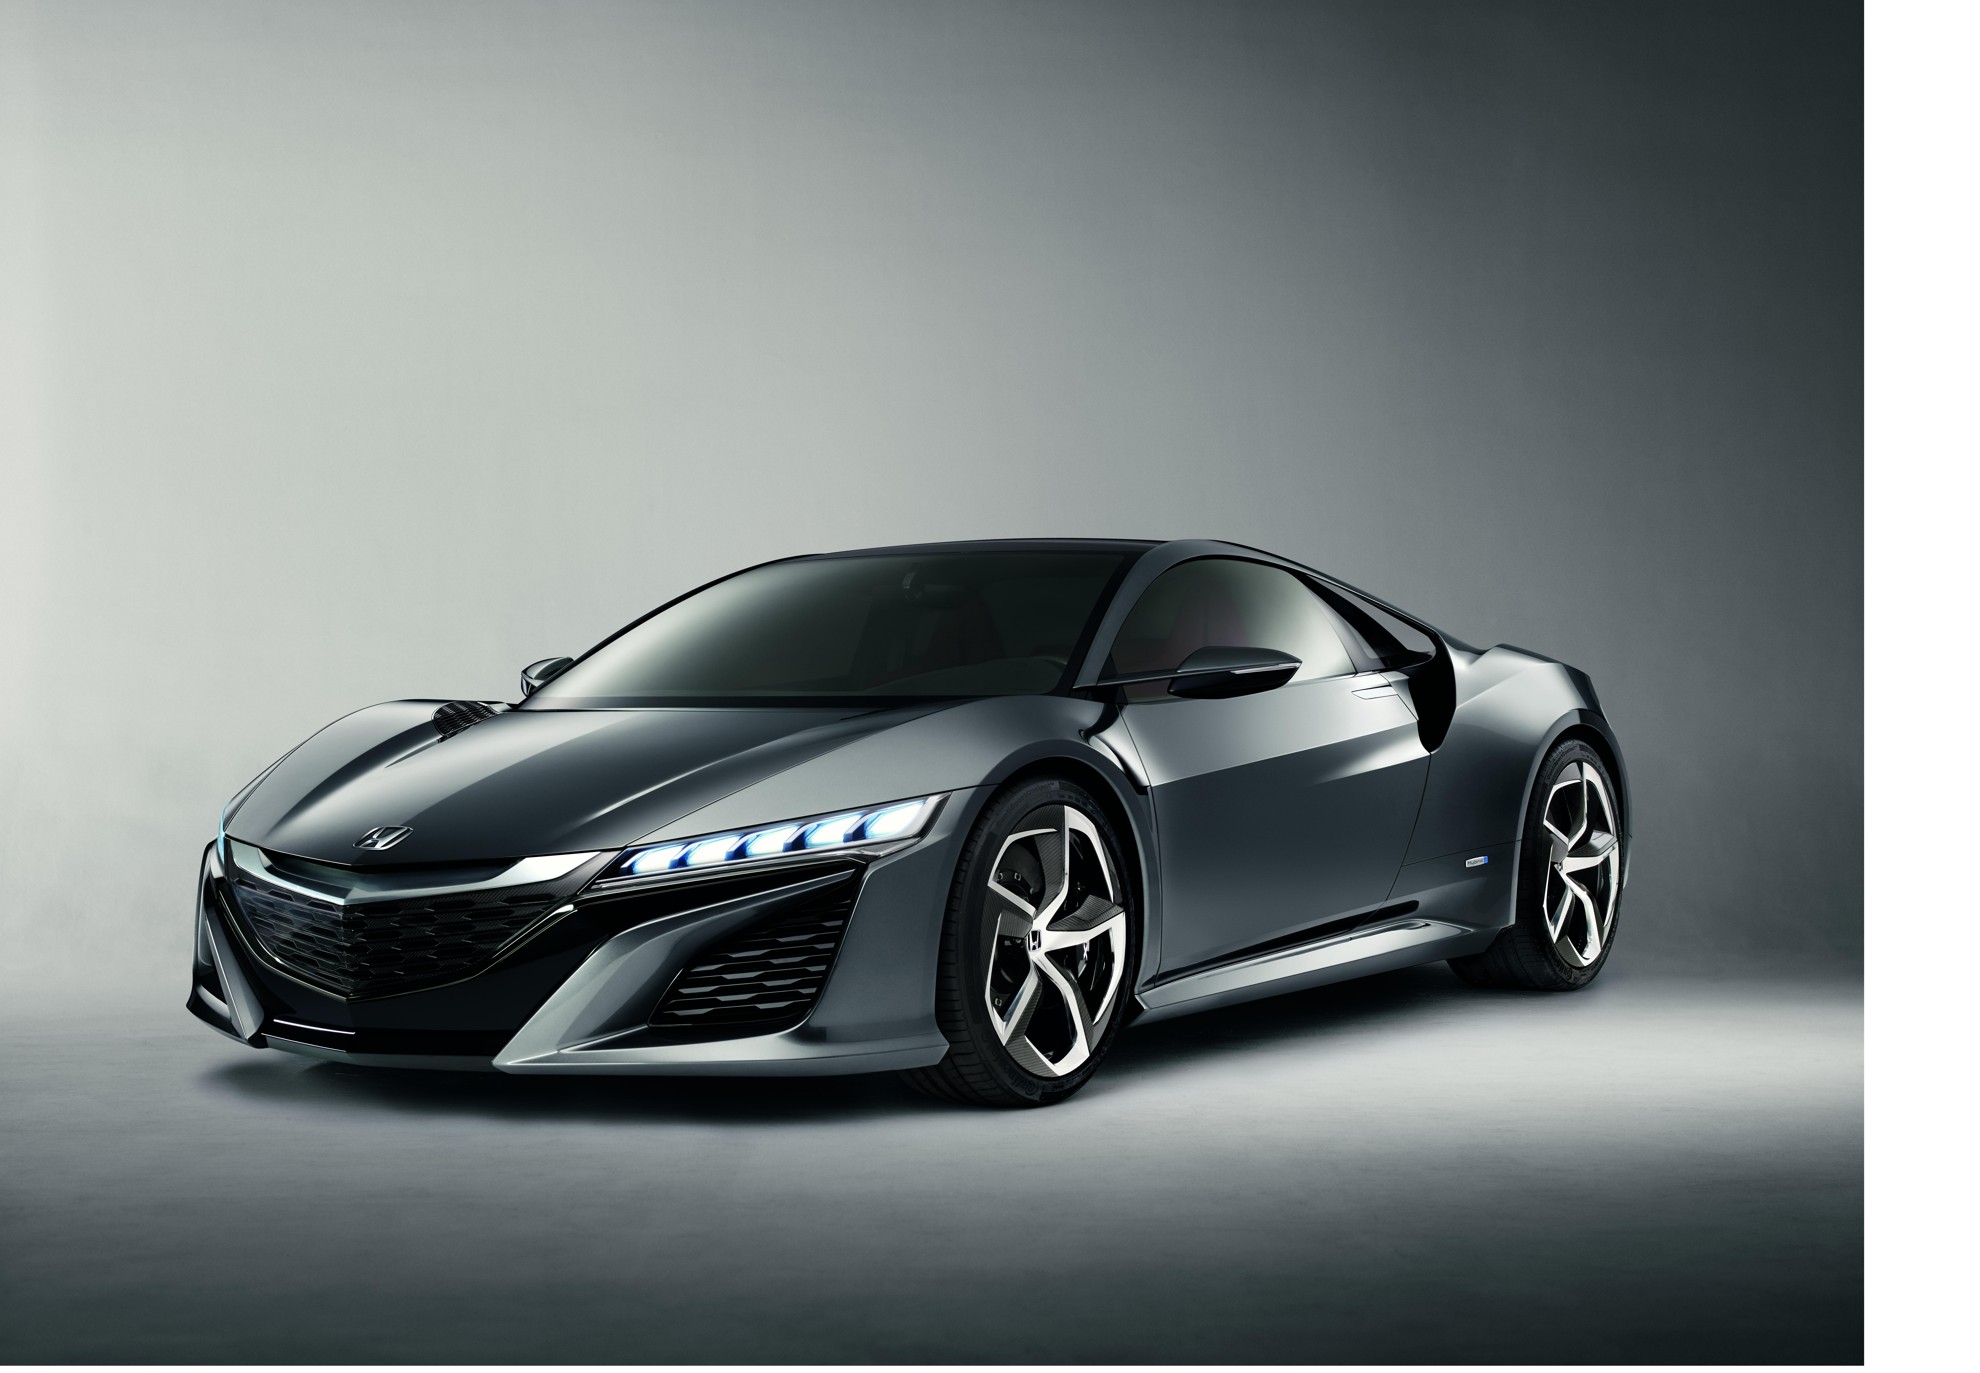 Geneva Motor Show 2013 – Honda Concept Cars